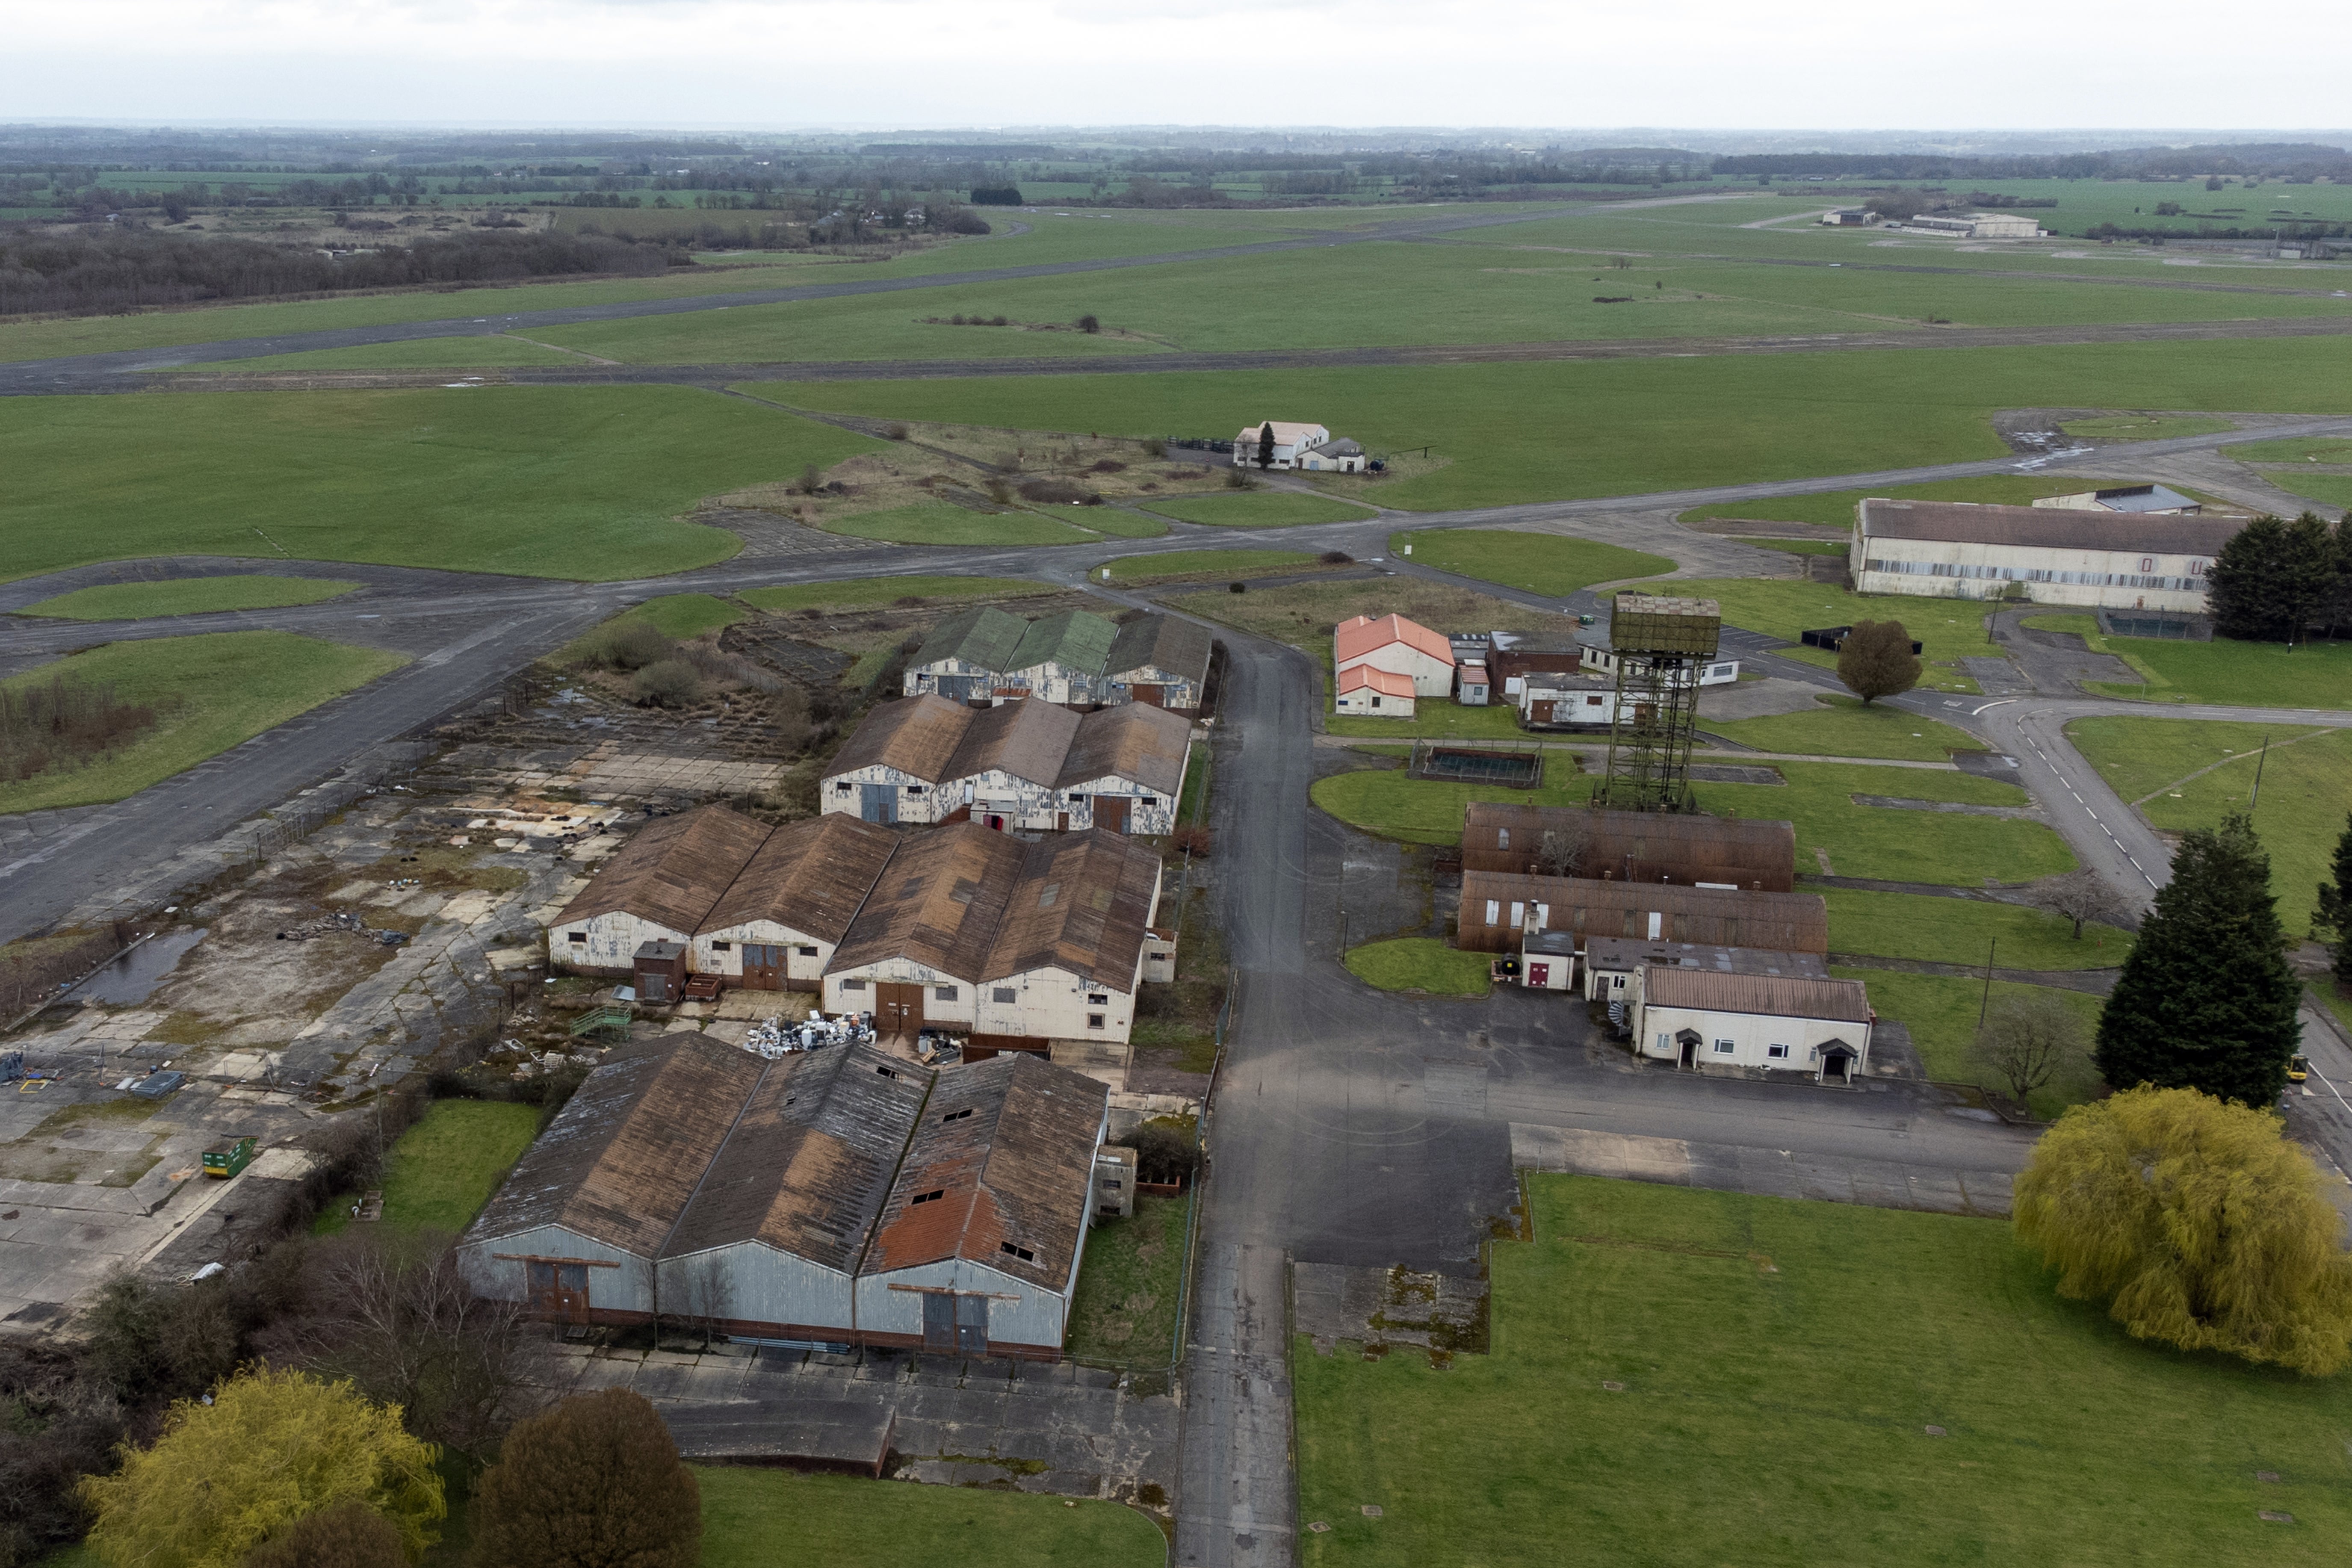 An aerial view of RAF Wethersfield in Essex